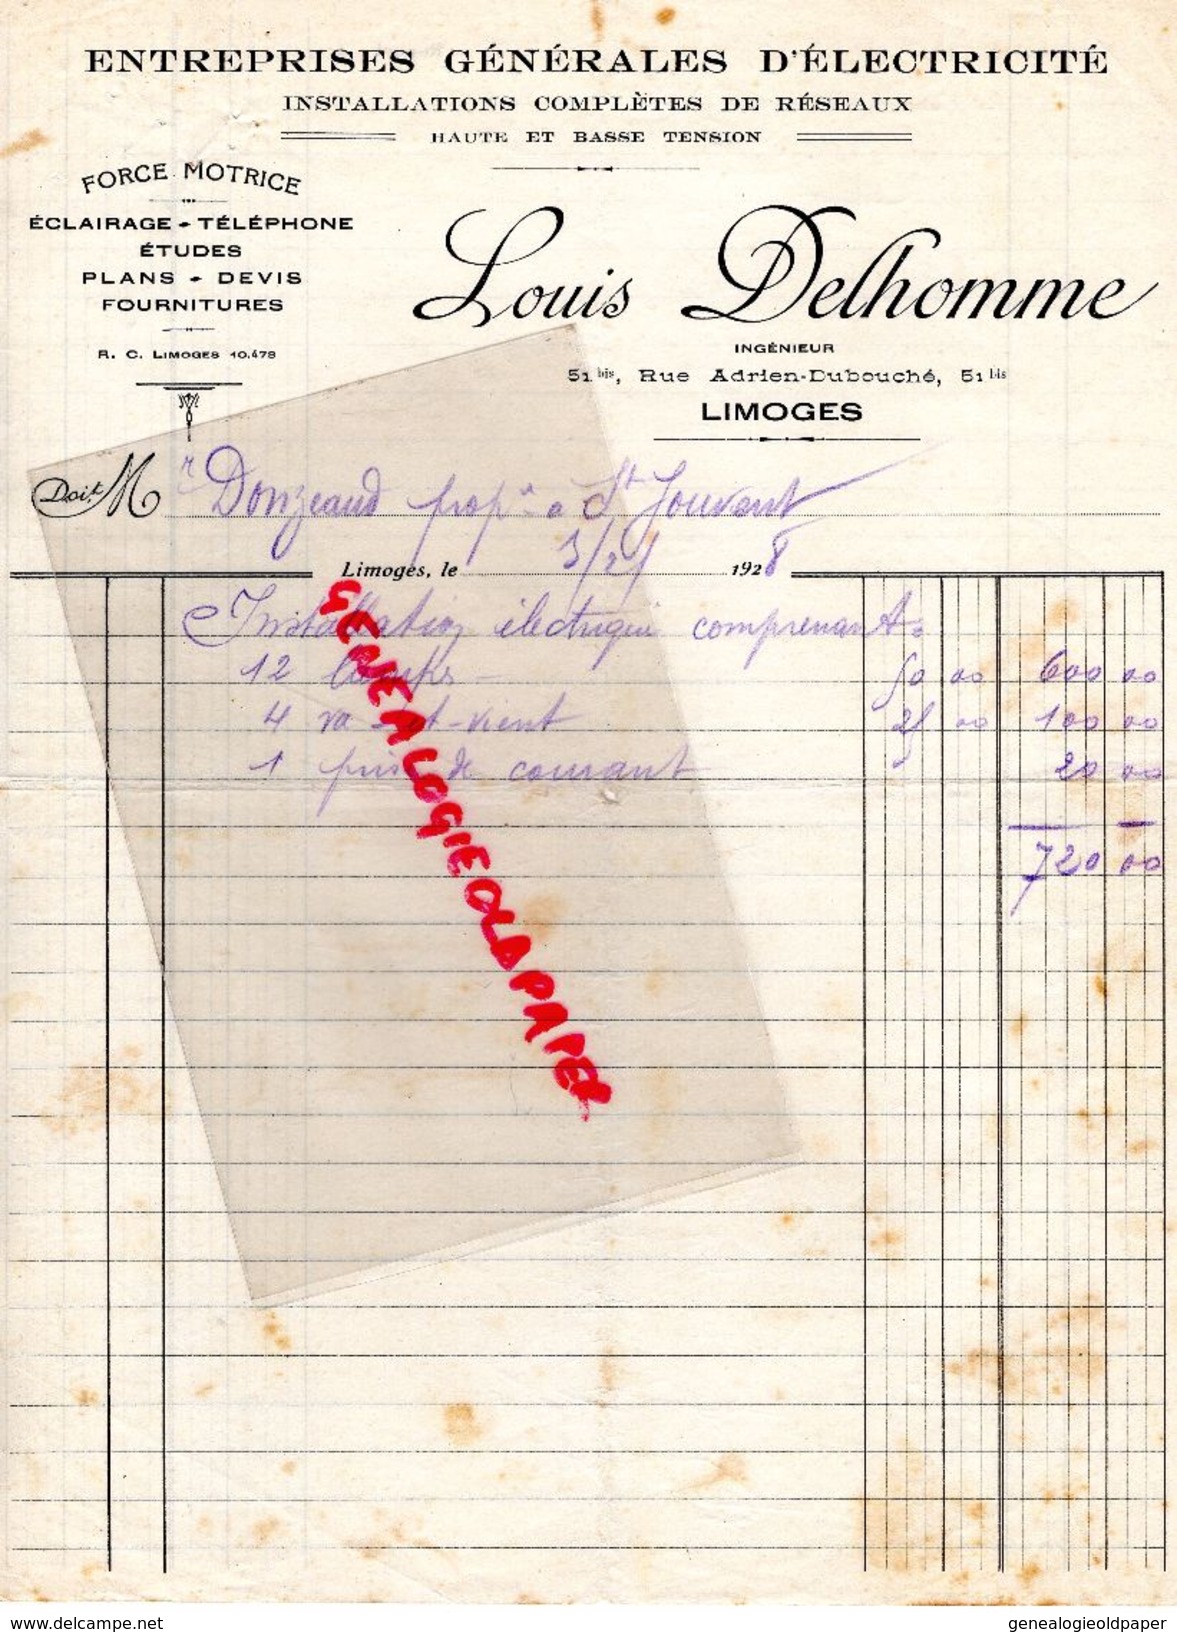 87 - LIMOGES - FACTURE LOUIS DELHOMME -INGENIEUR 51 RUE ADRIEN DUBOUCHE- ELECTRICITE FORCE MOTRICE- 1928 - Electricity & Gas